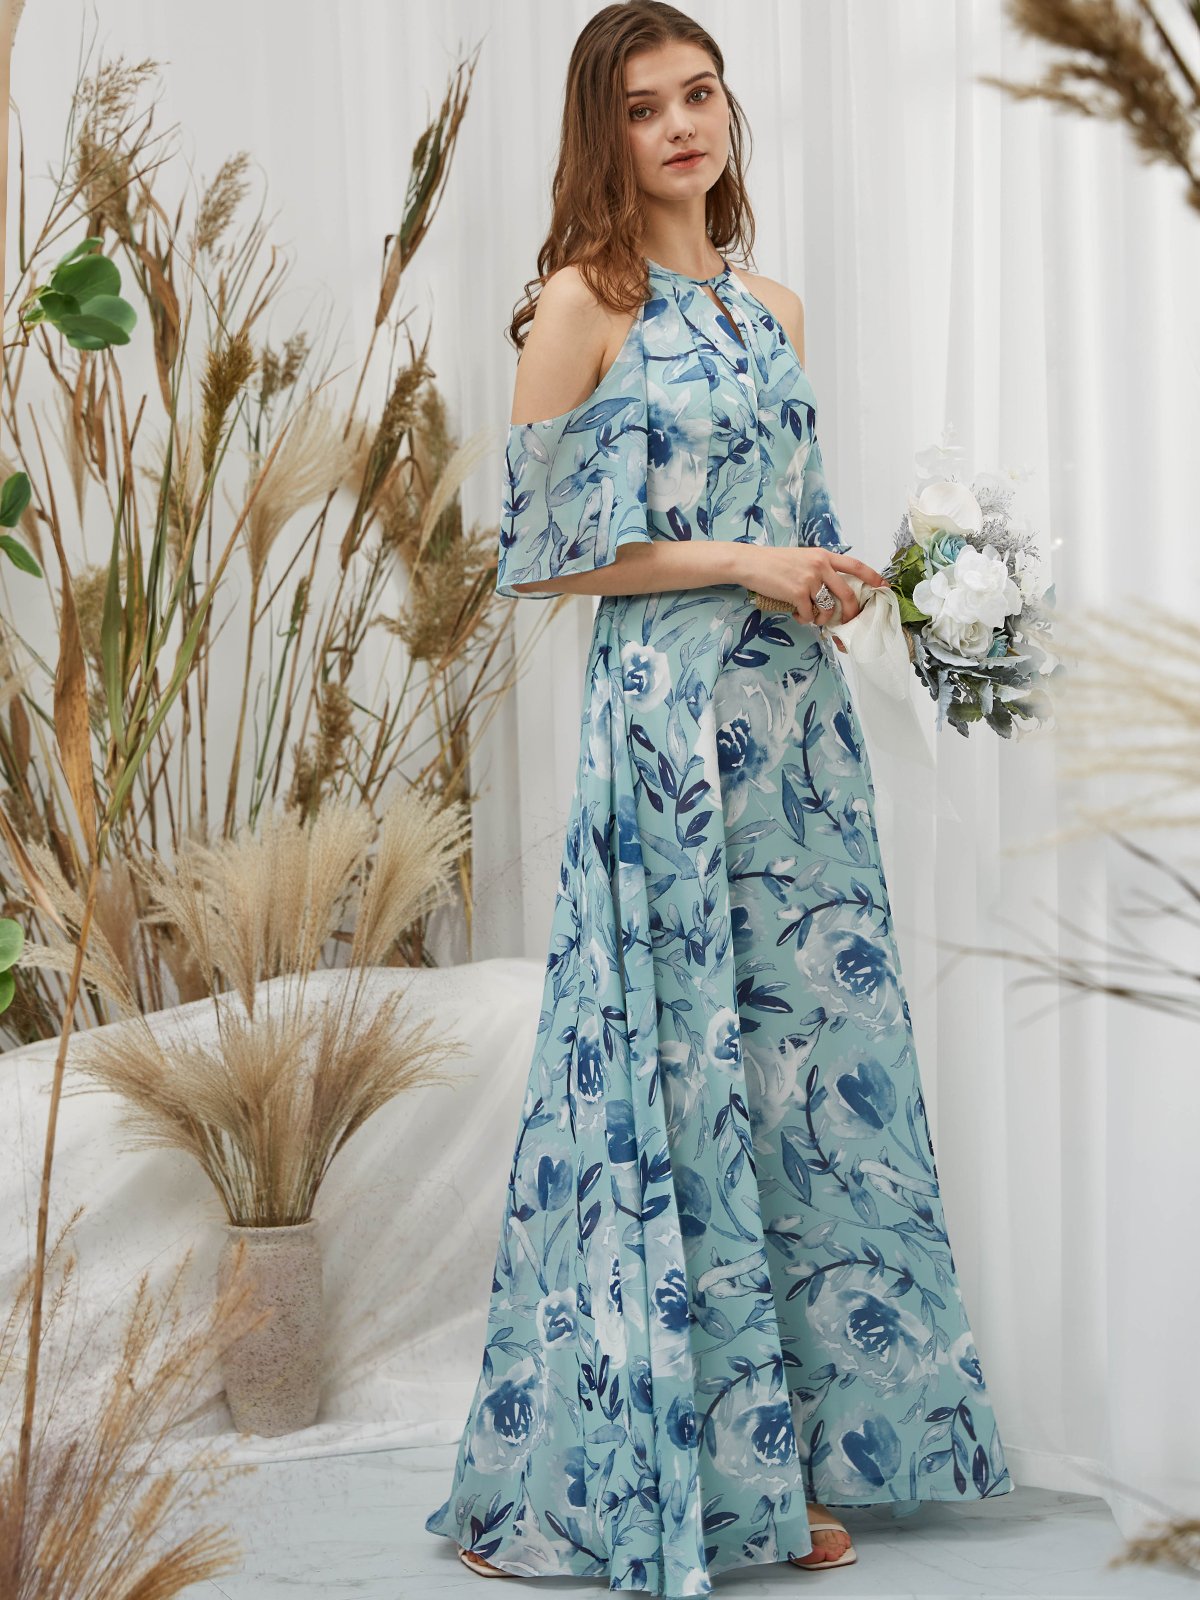 Halter Off the Shoulder Chiffon Print Floral Ivory Steel Blue Floor Length Formal Gown